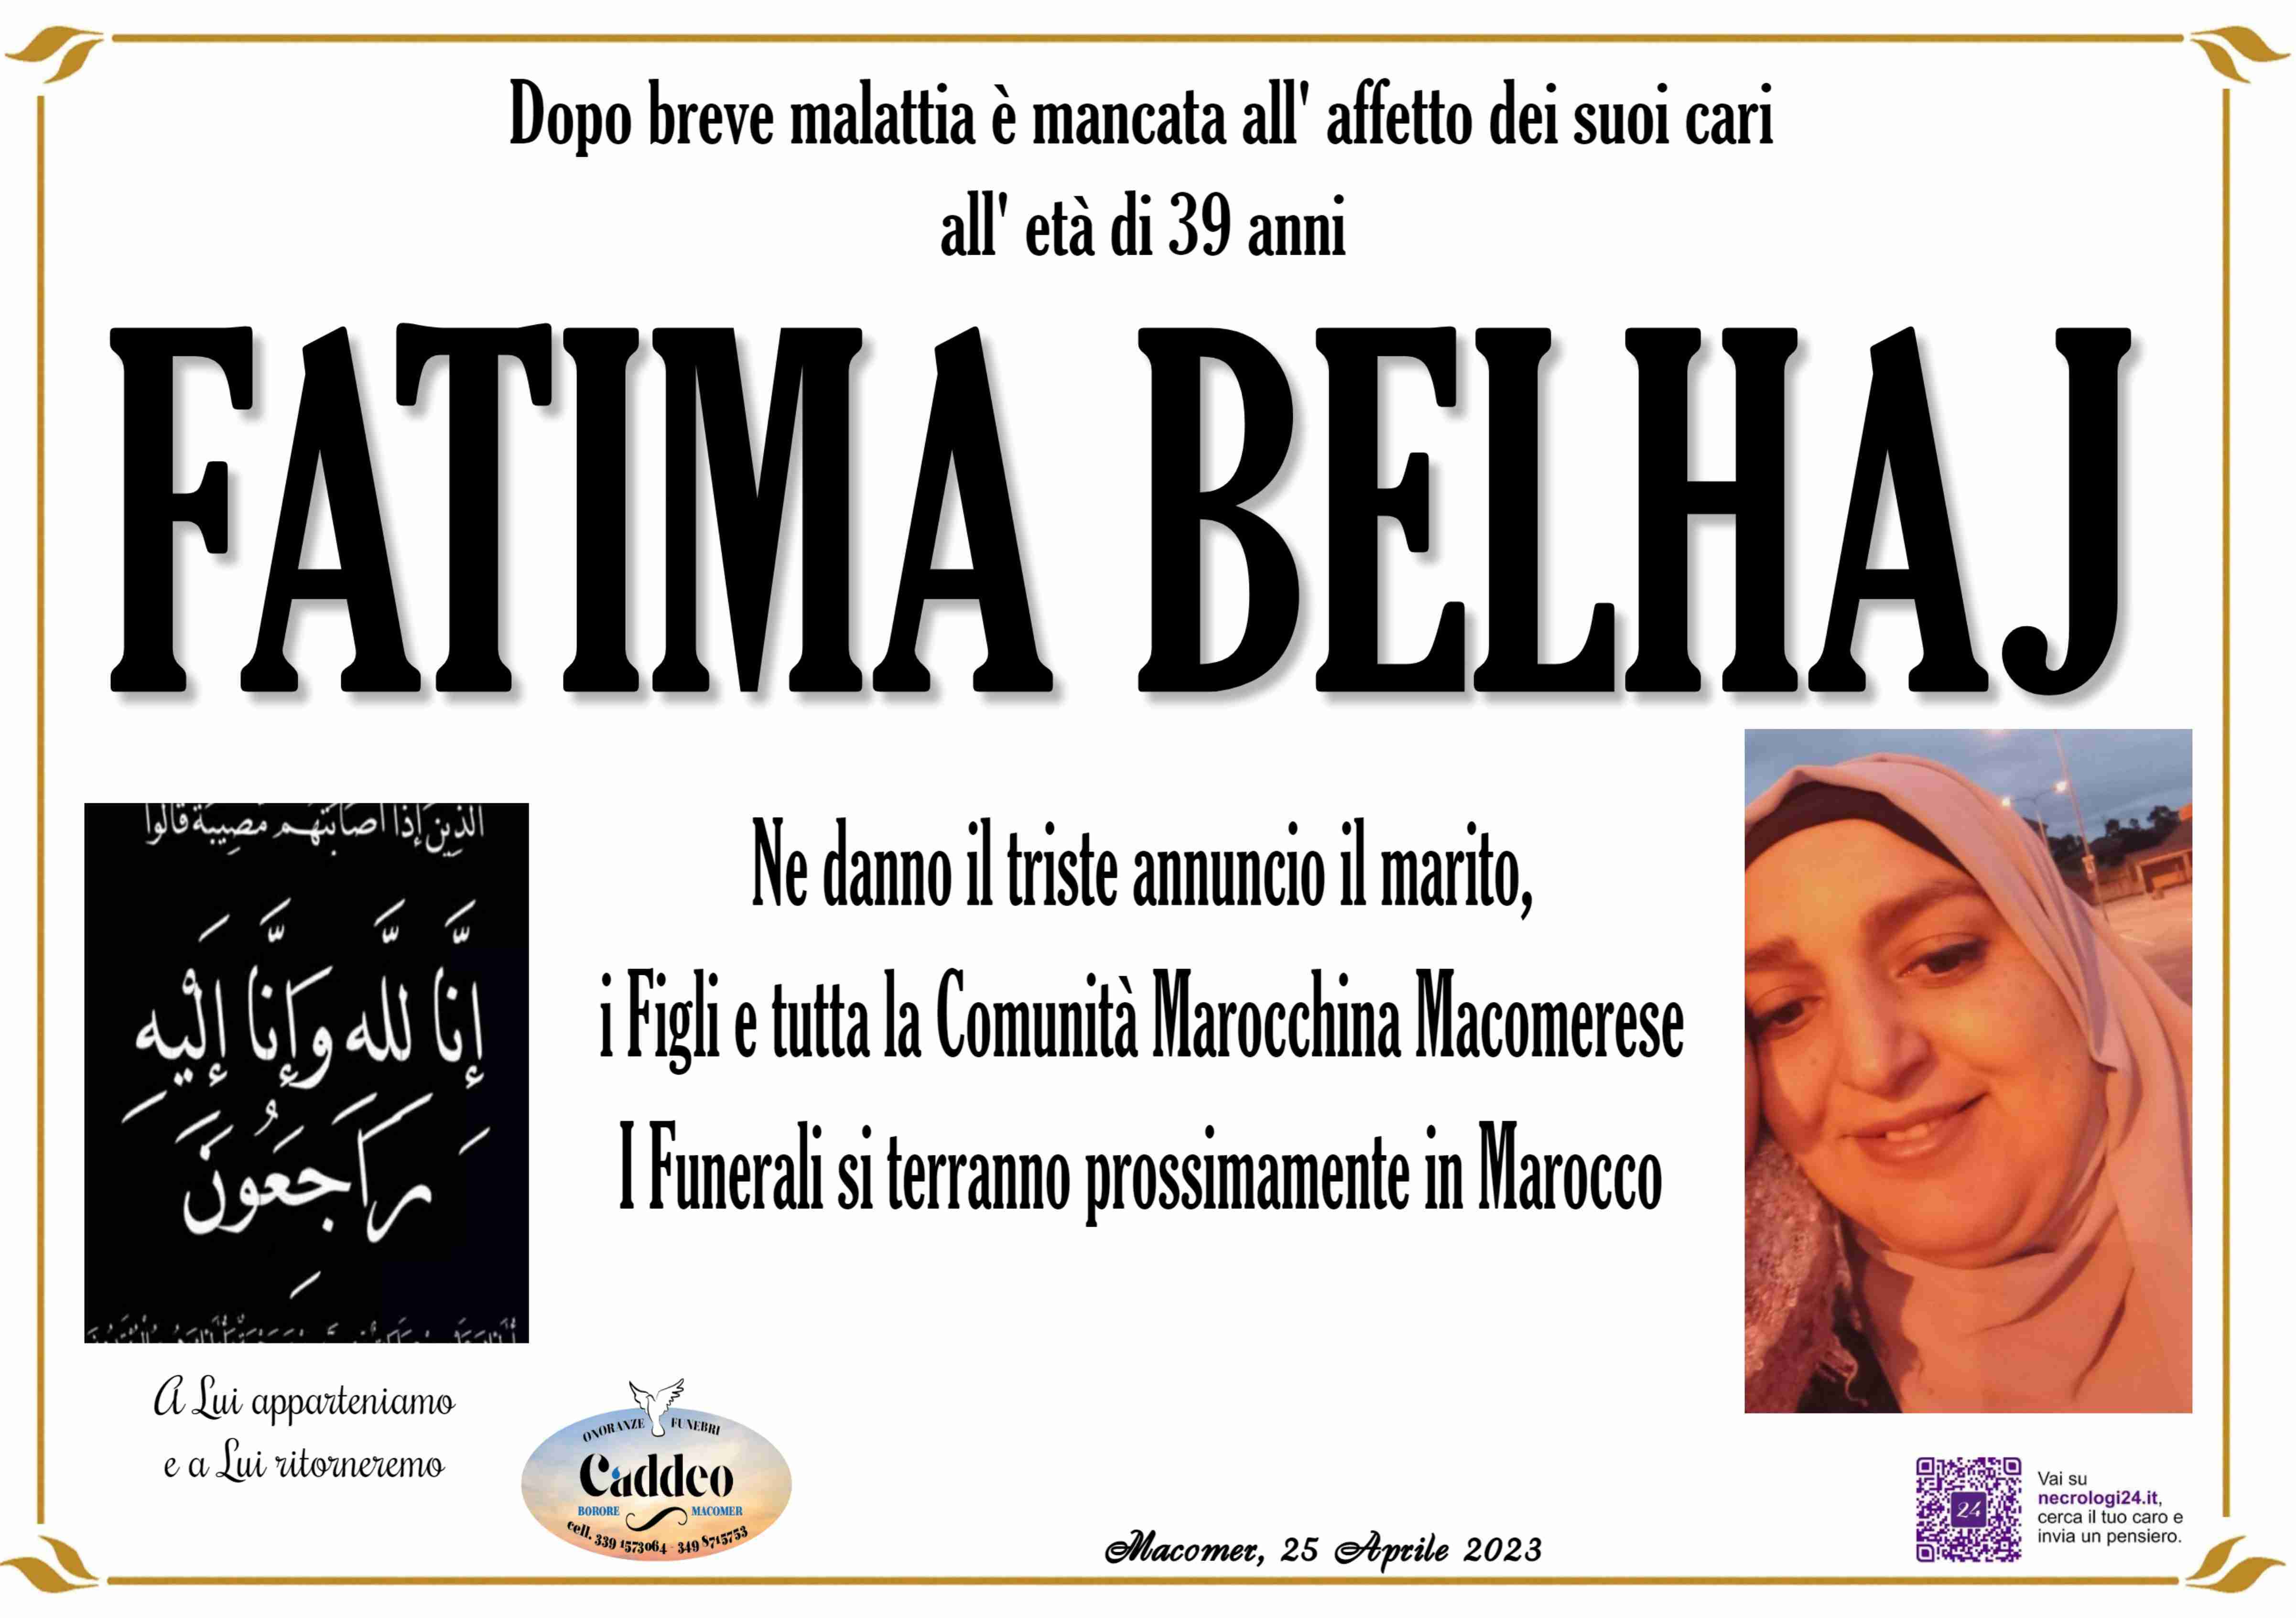 Fatima Belhaj